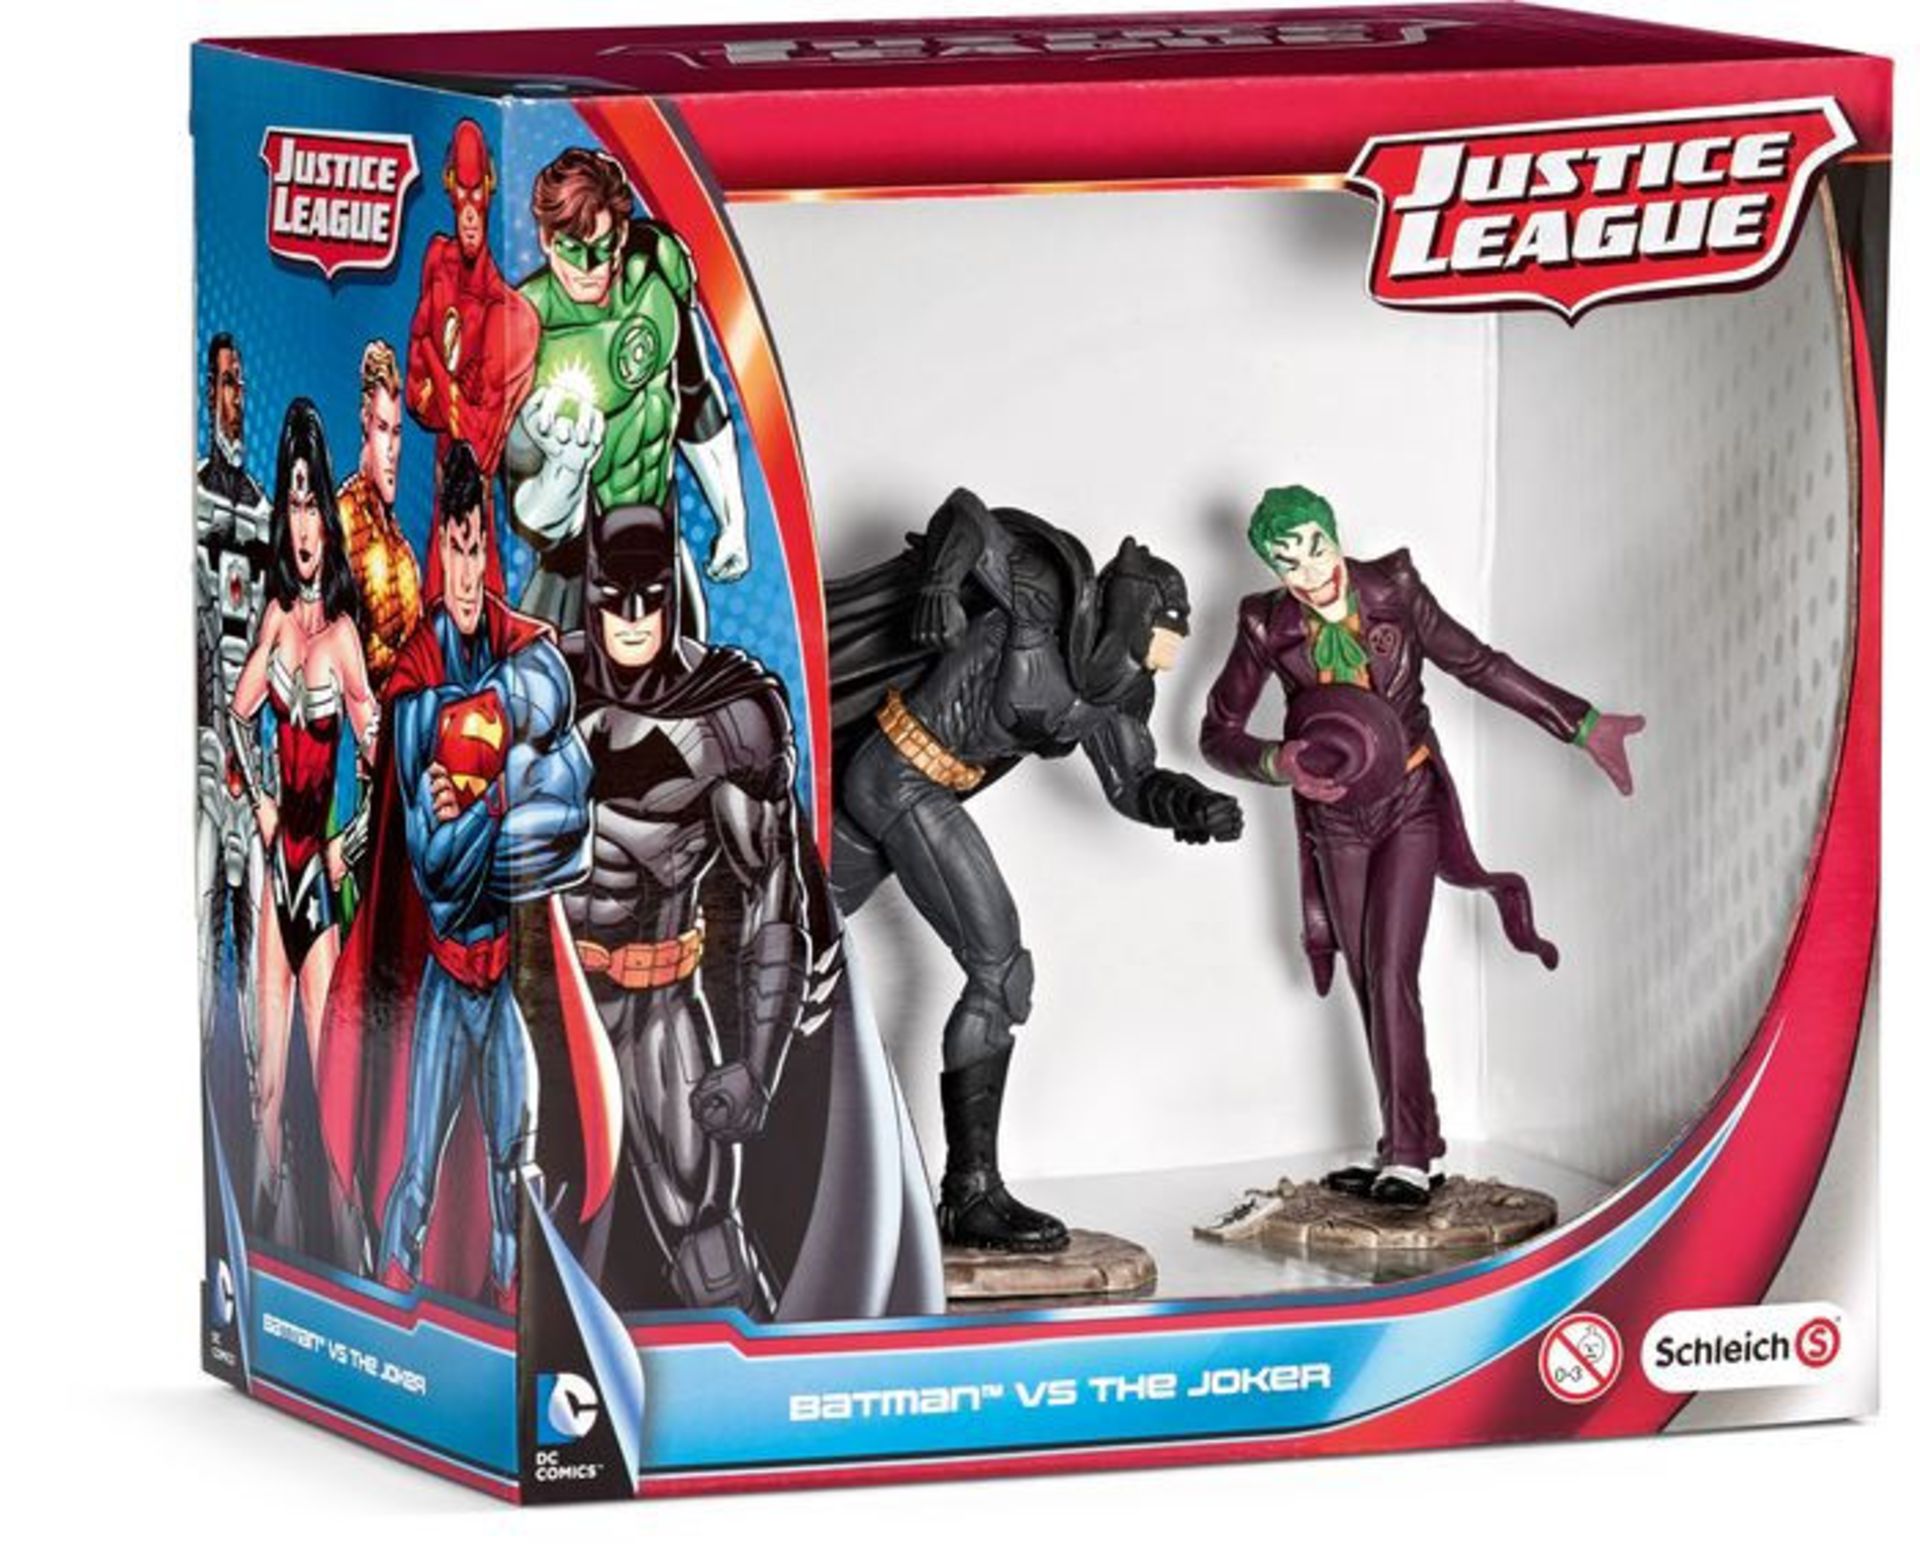 V Brand New Justice League Batman vs Joker Figures eBay Price £15.99 X 2 YOUR BID PRICE TO BE